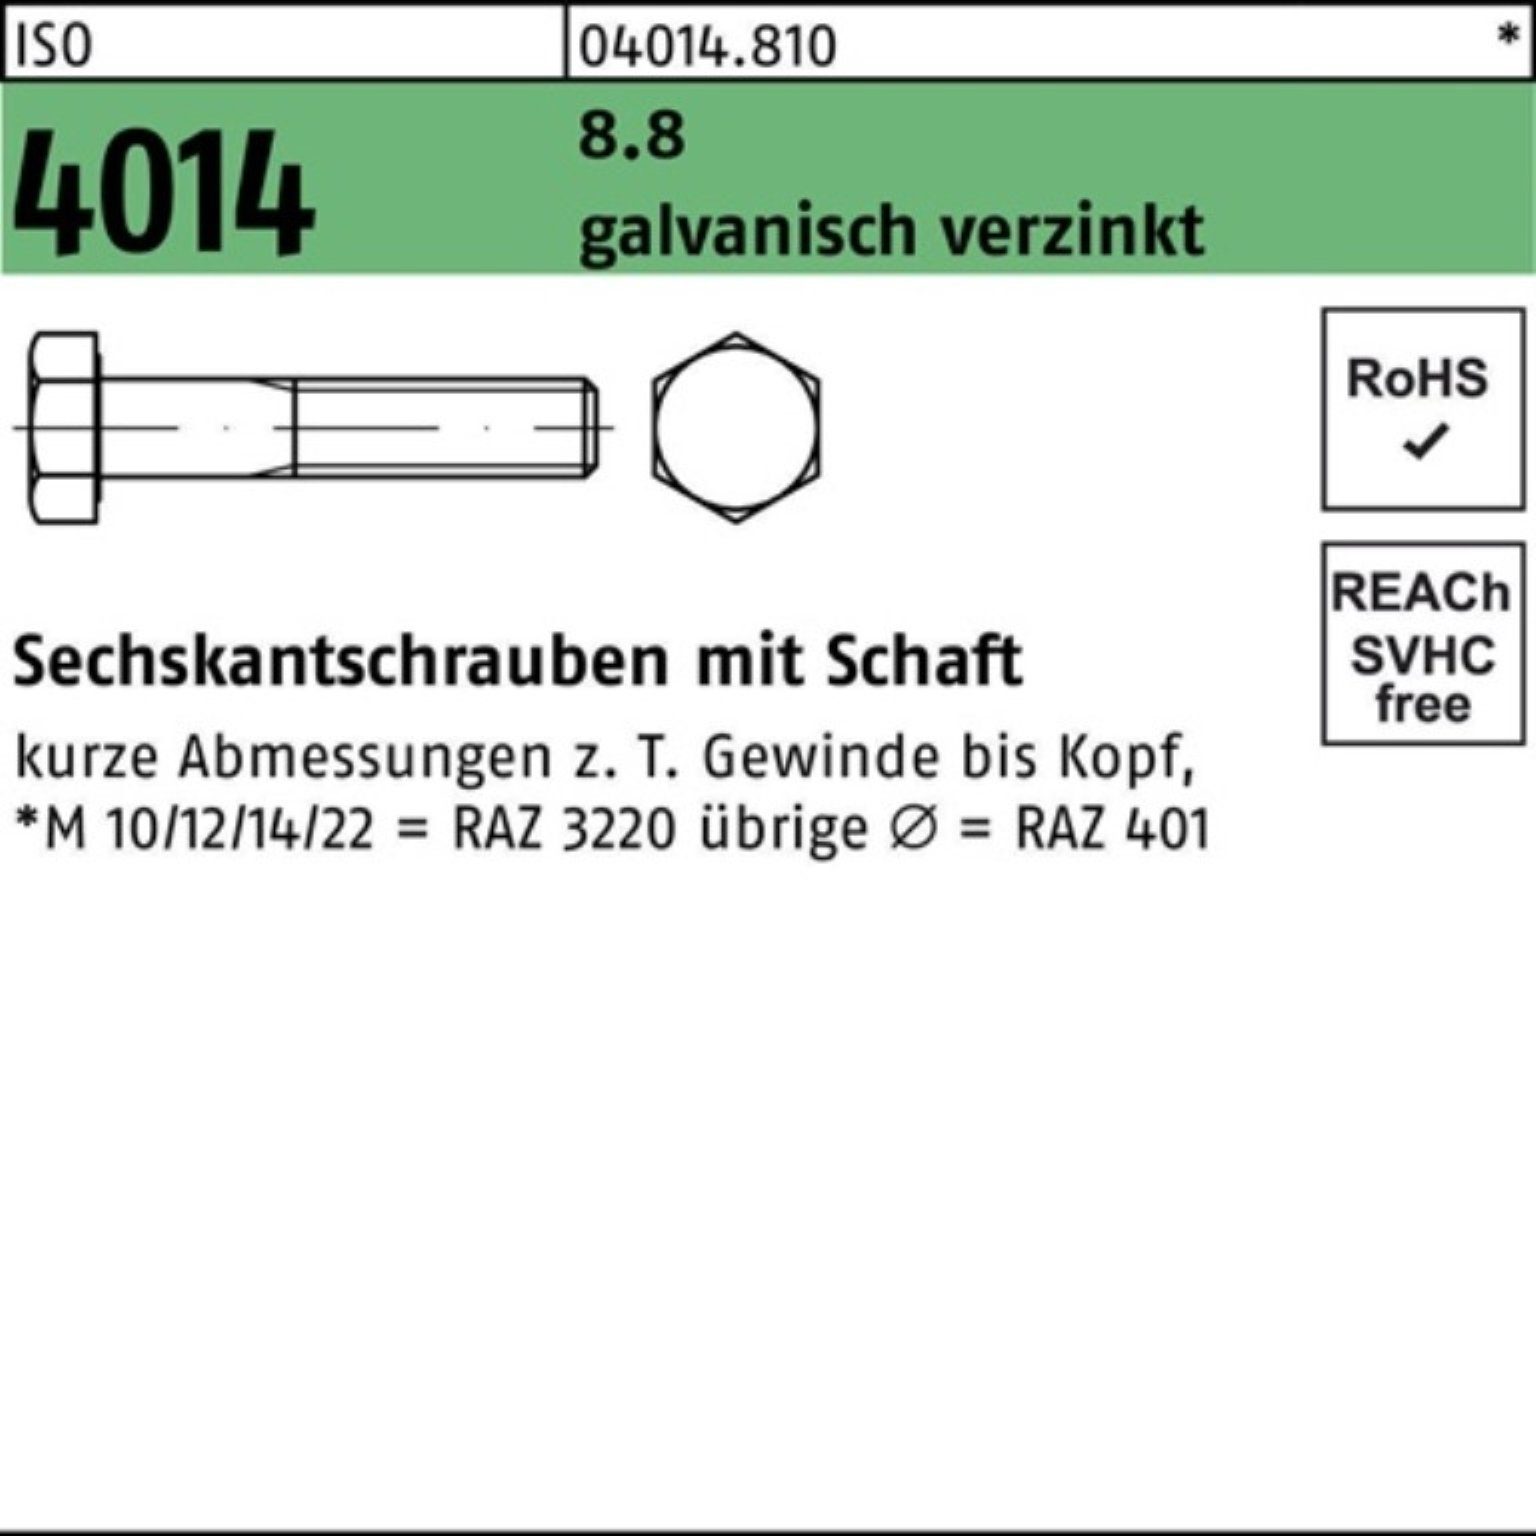 Bufab Sechskantschraube 100er Pack Sechskantschraube ISO 4014 Schaft M36x 250 8.8 galv.verz. 1 | Schrauben